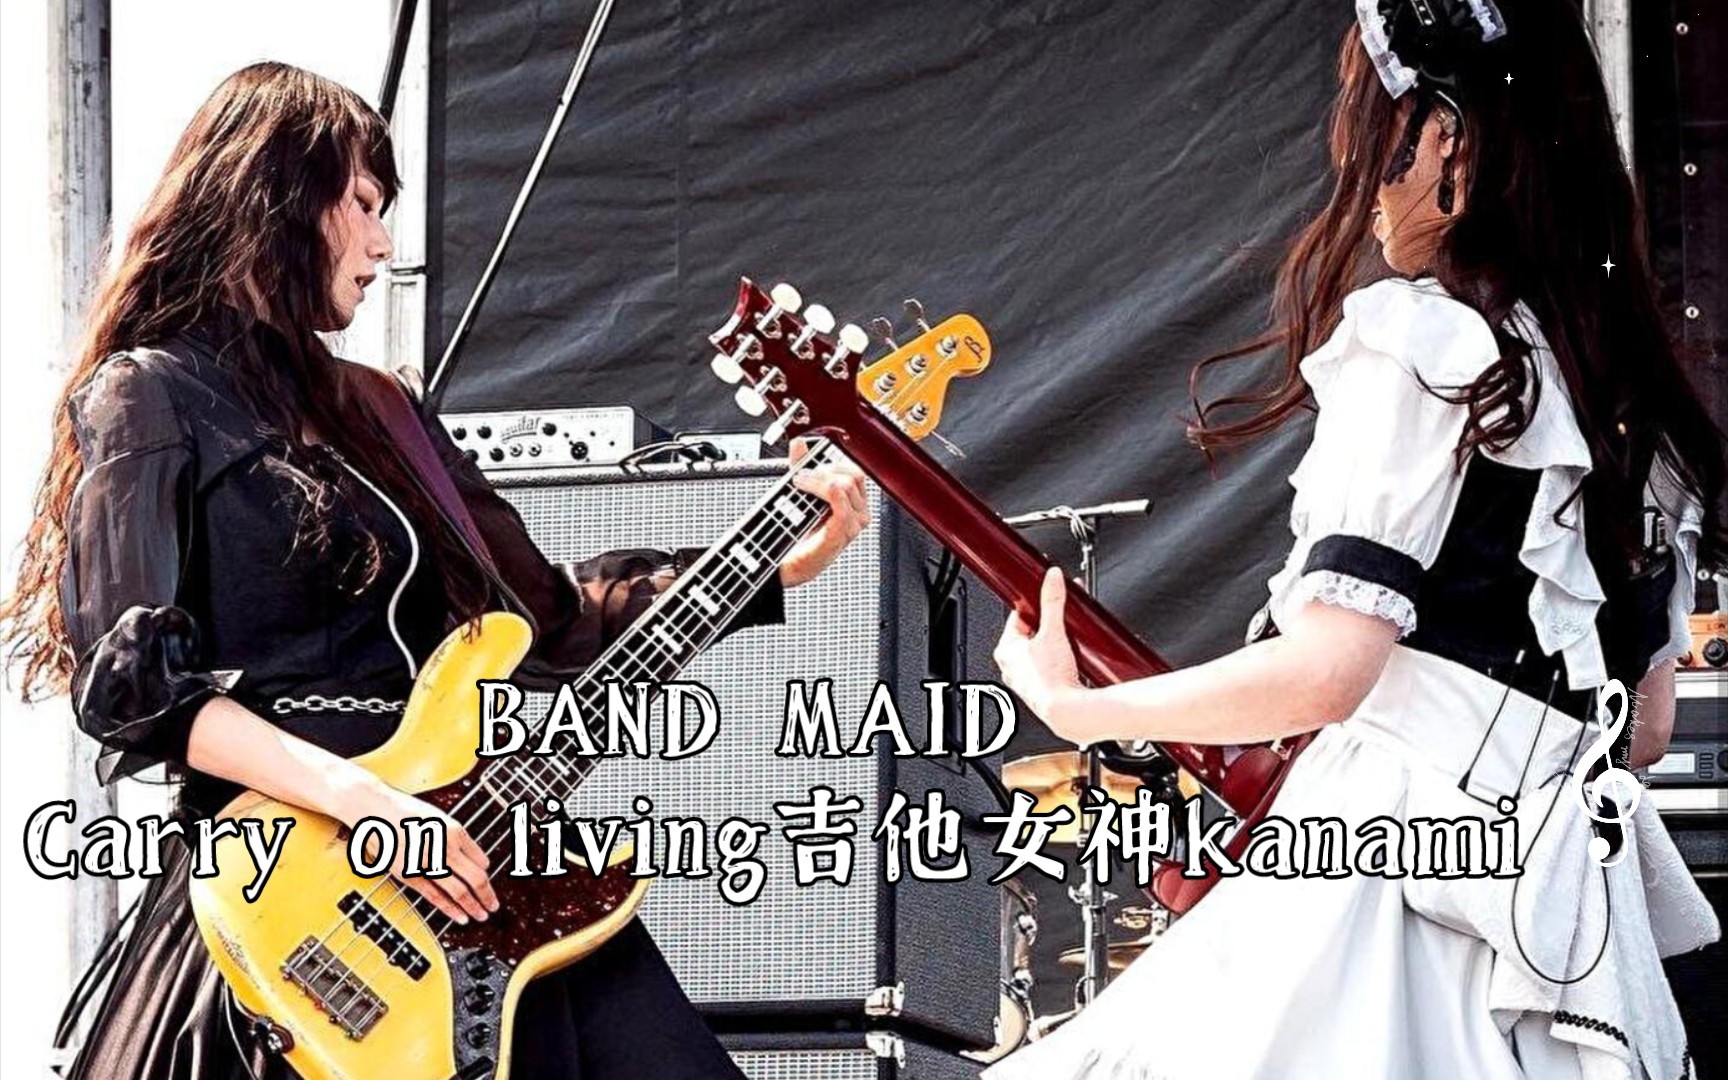 BAND MAID Carry on living吉他女神kanami